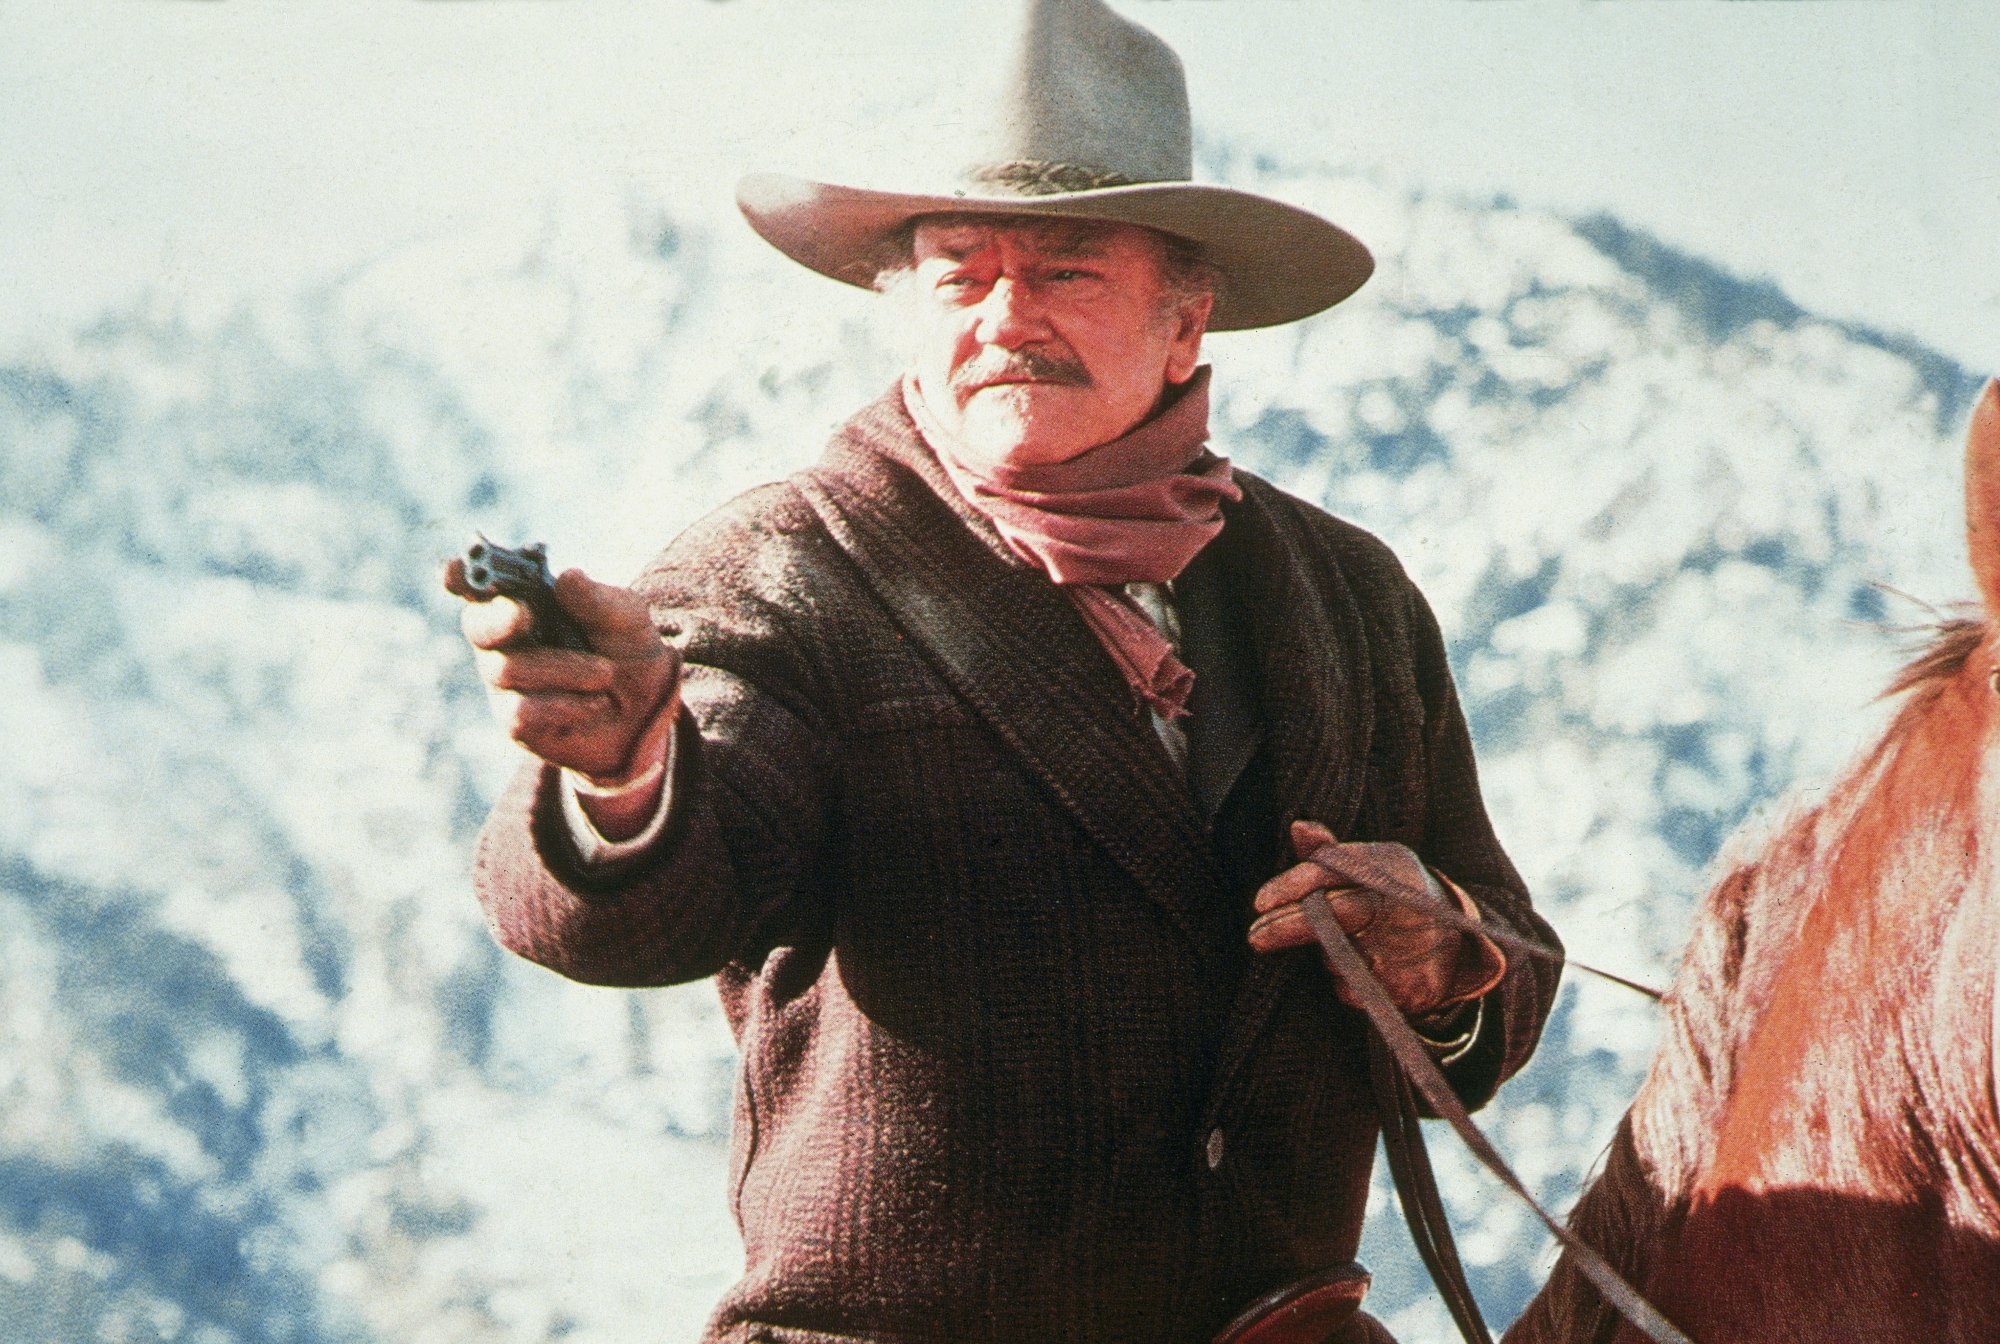 John Wayne movies 'The Shootist' aiming his gun while on horseback and wearing cowboy outfit